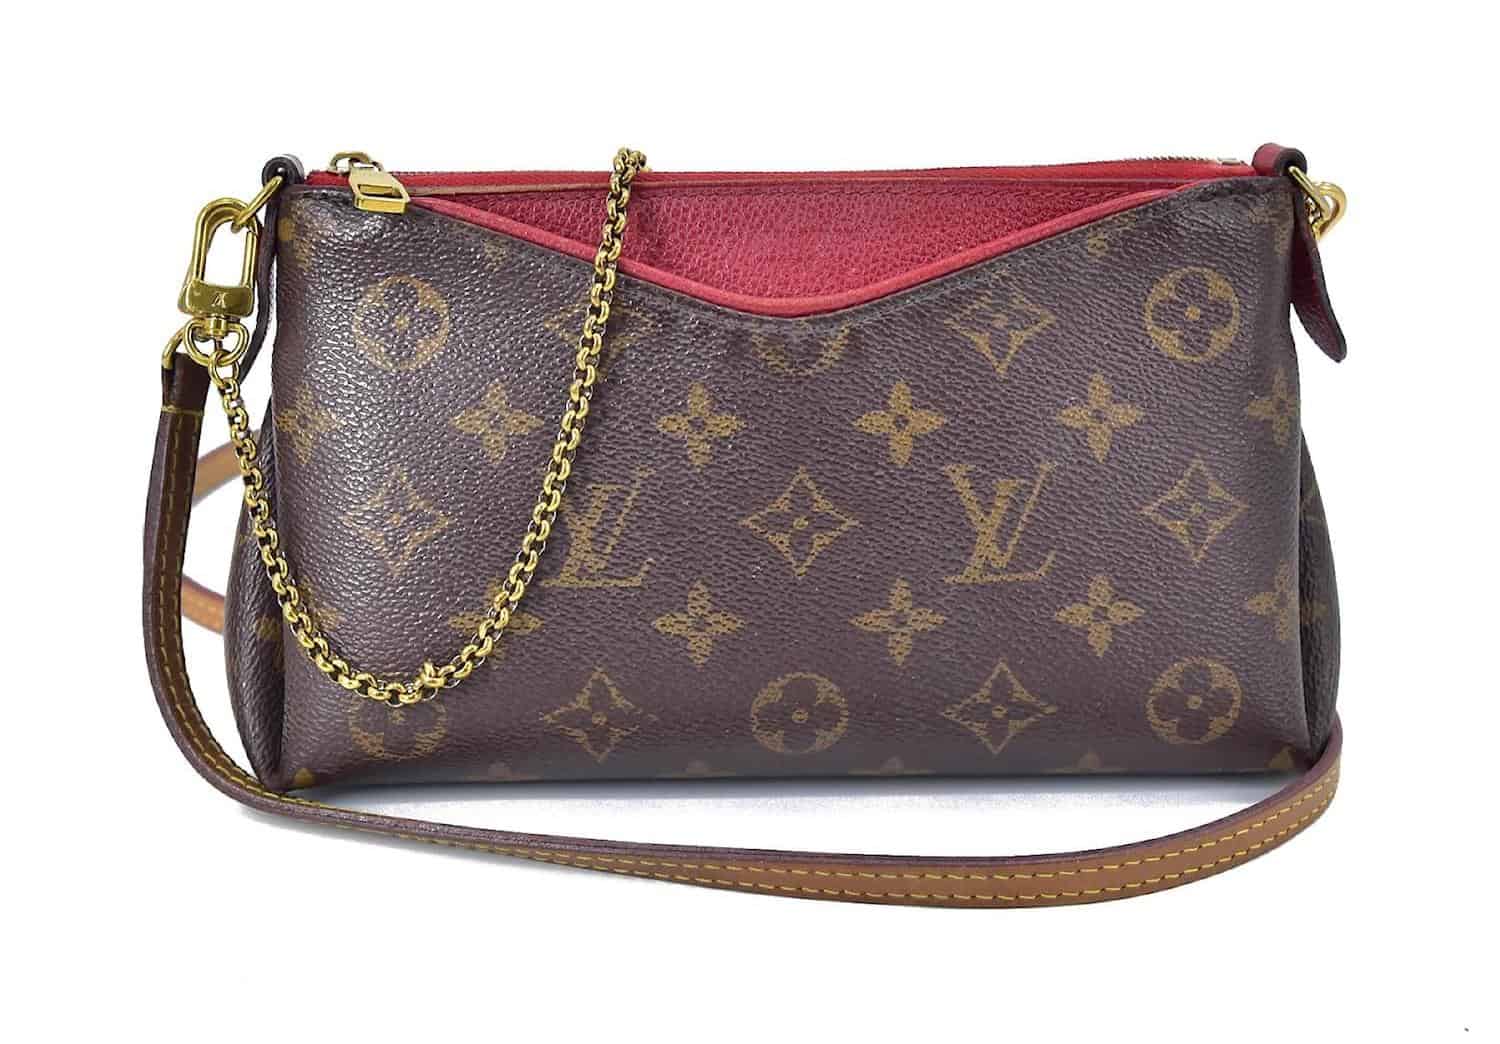 Louis Vuitton Handbags Outlet Store  Bags Luxury purses Luxury bags